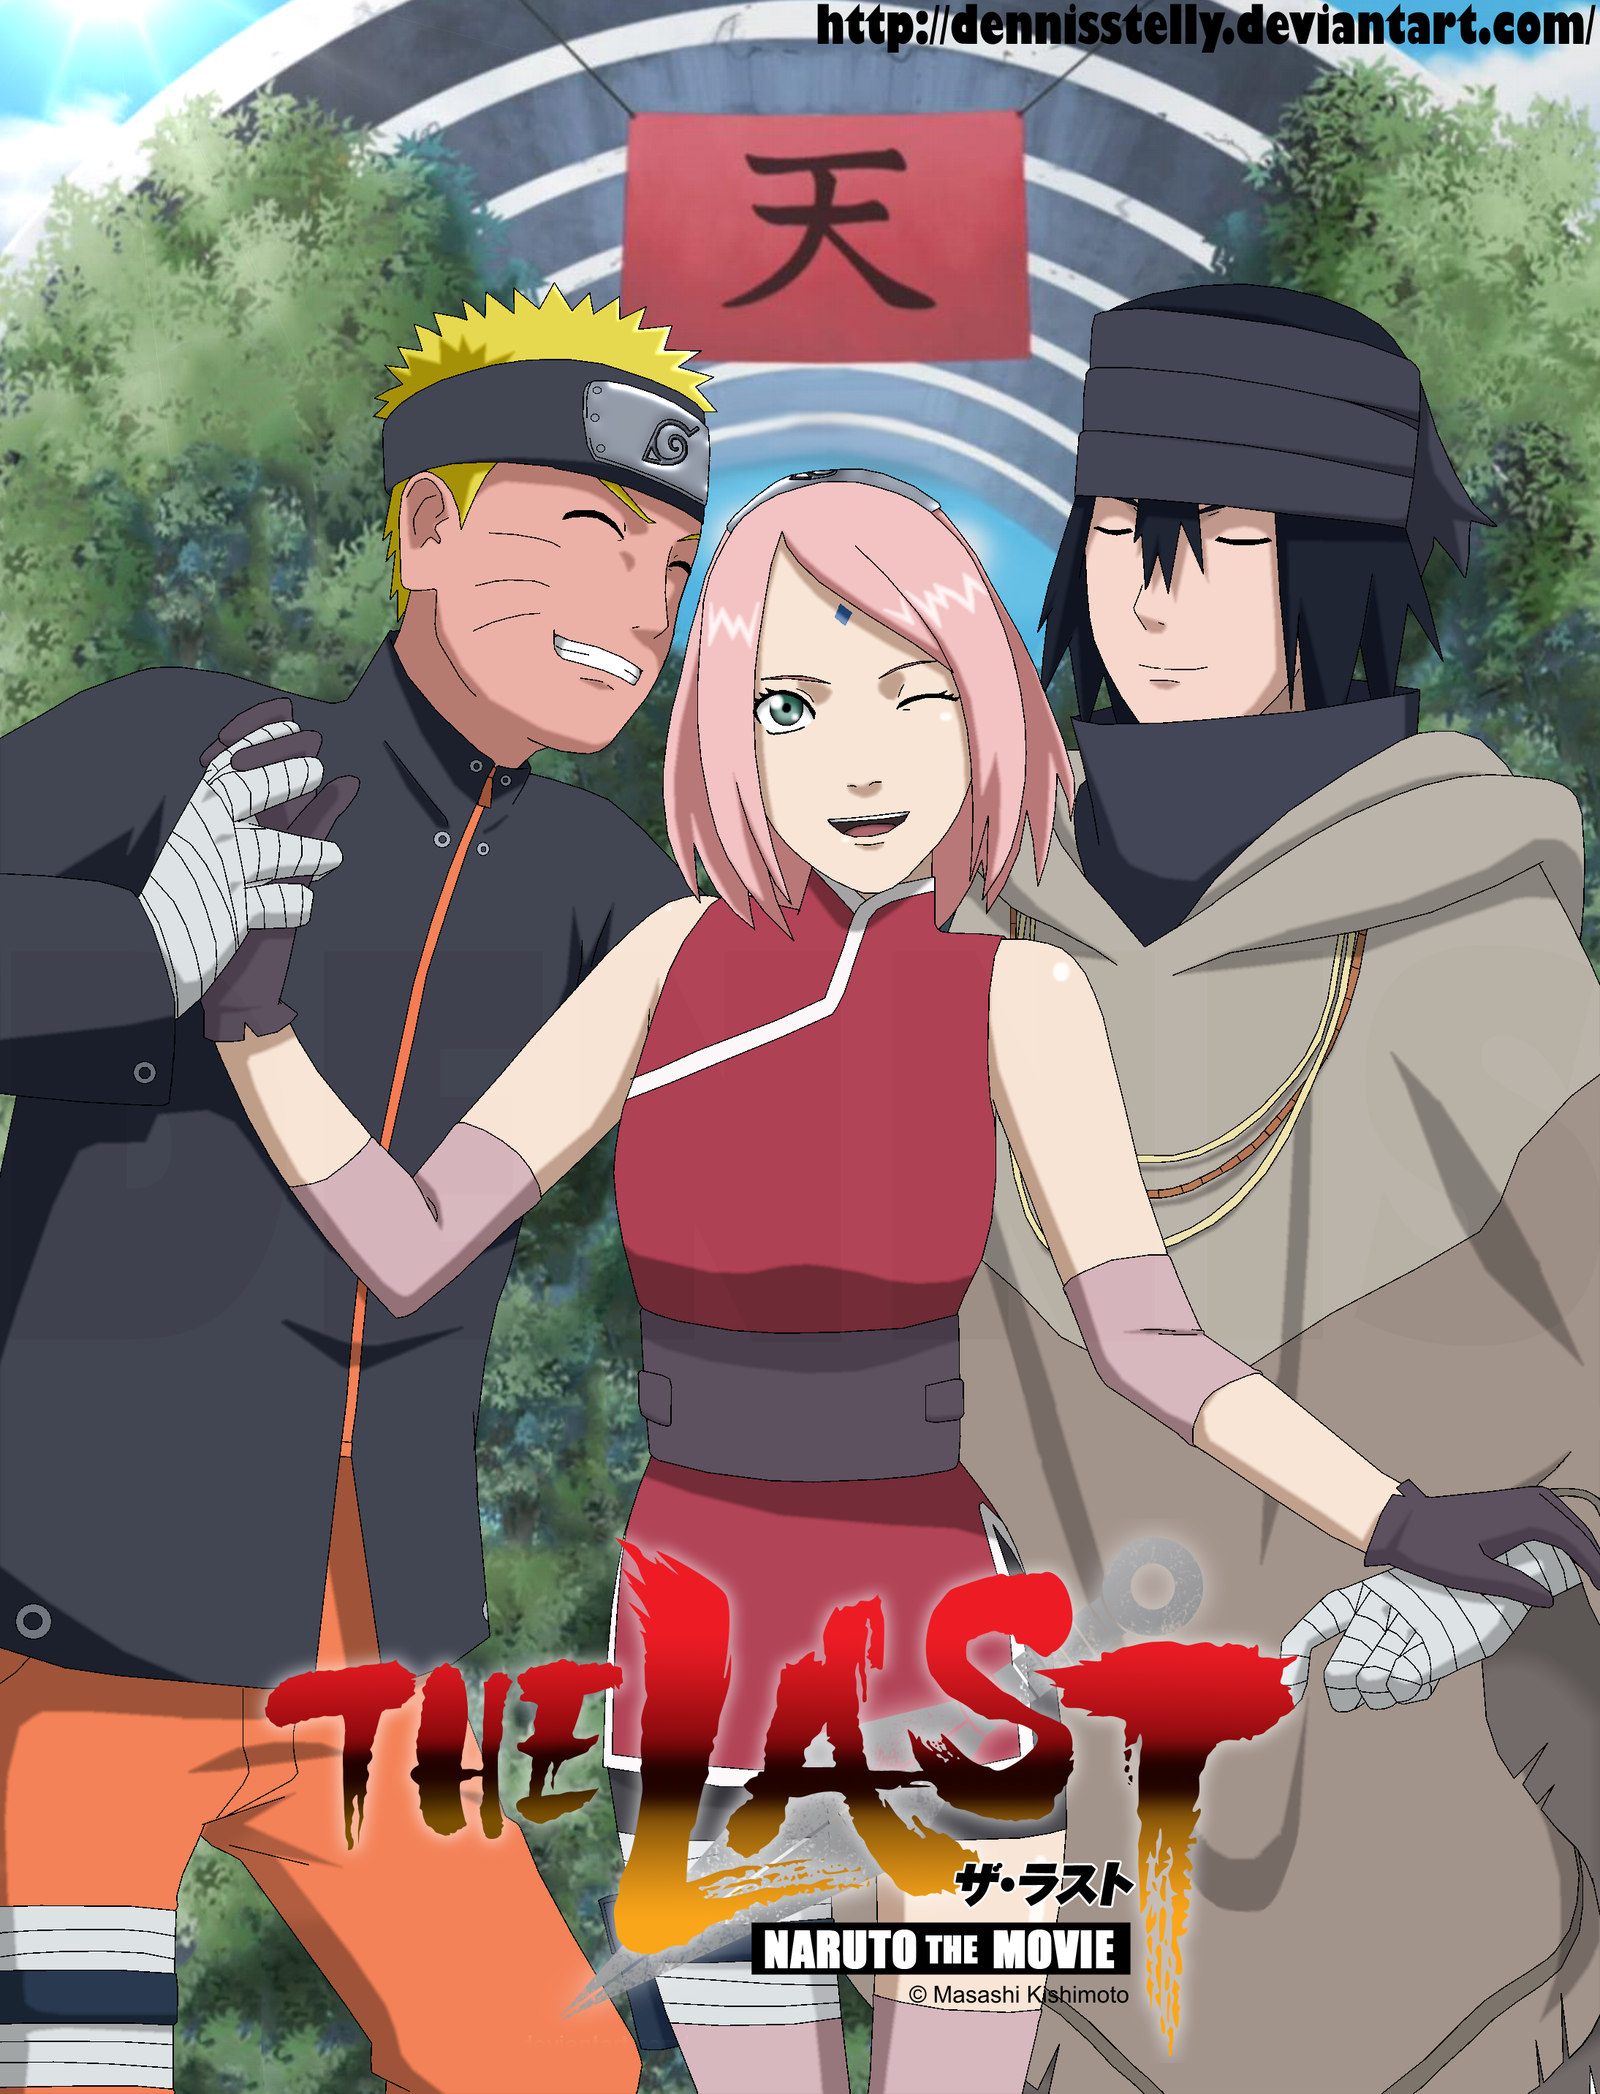 Naruto The Last Movie Team By Dennisstelly